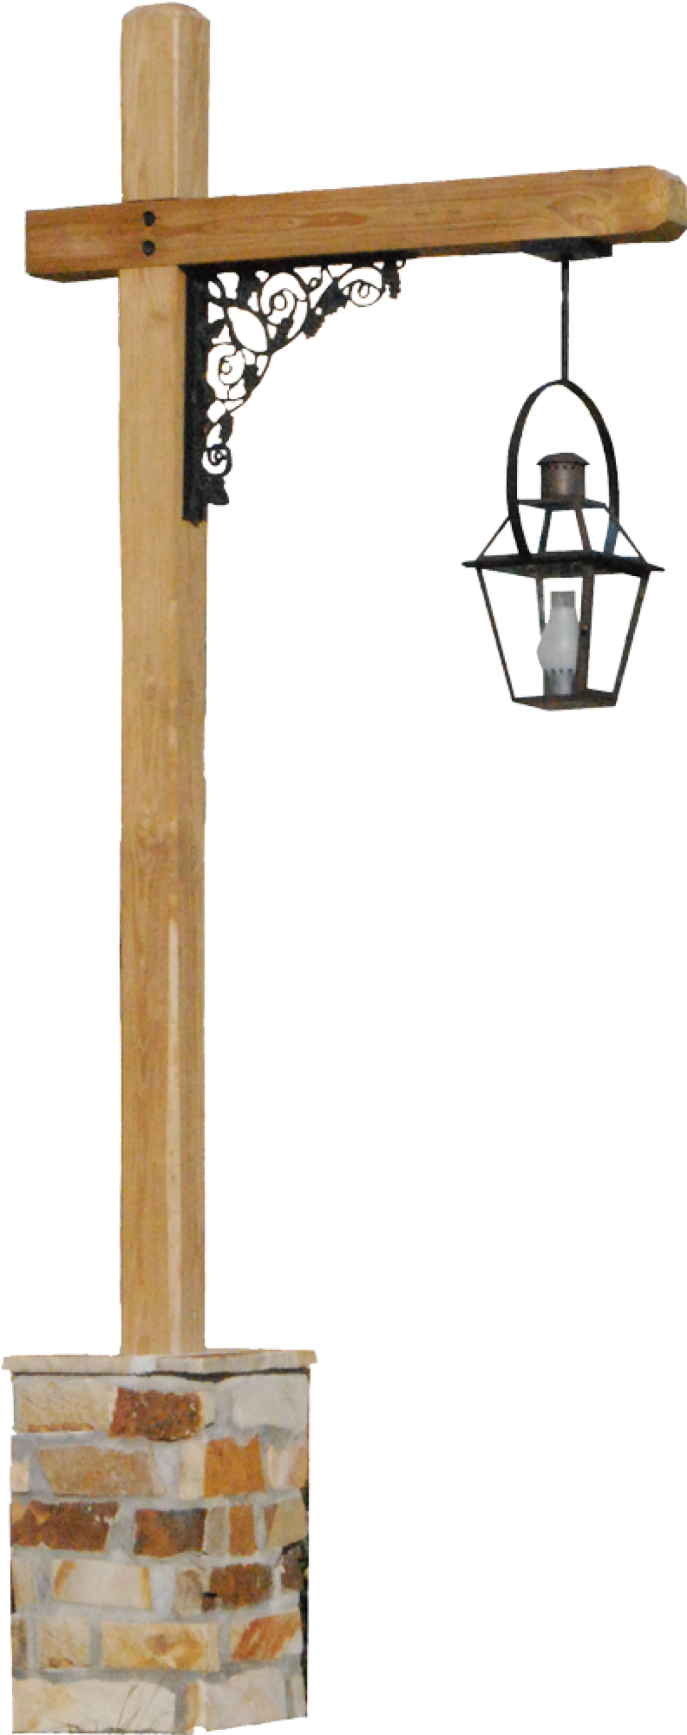 Decorative Wooden Posts Designs - Exterior Light Wood Post (687x1735)